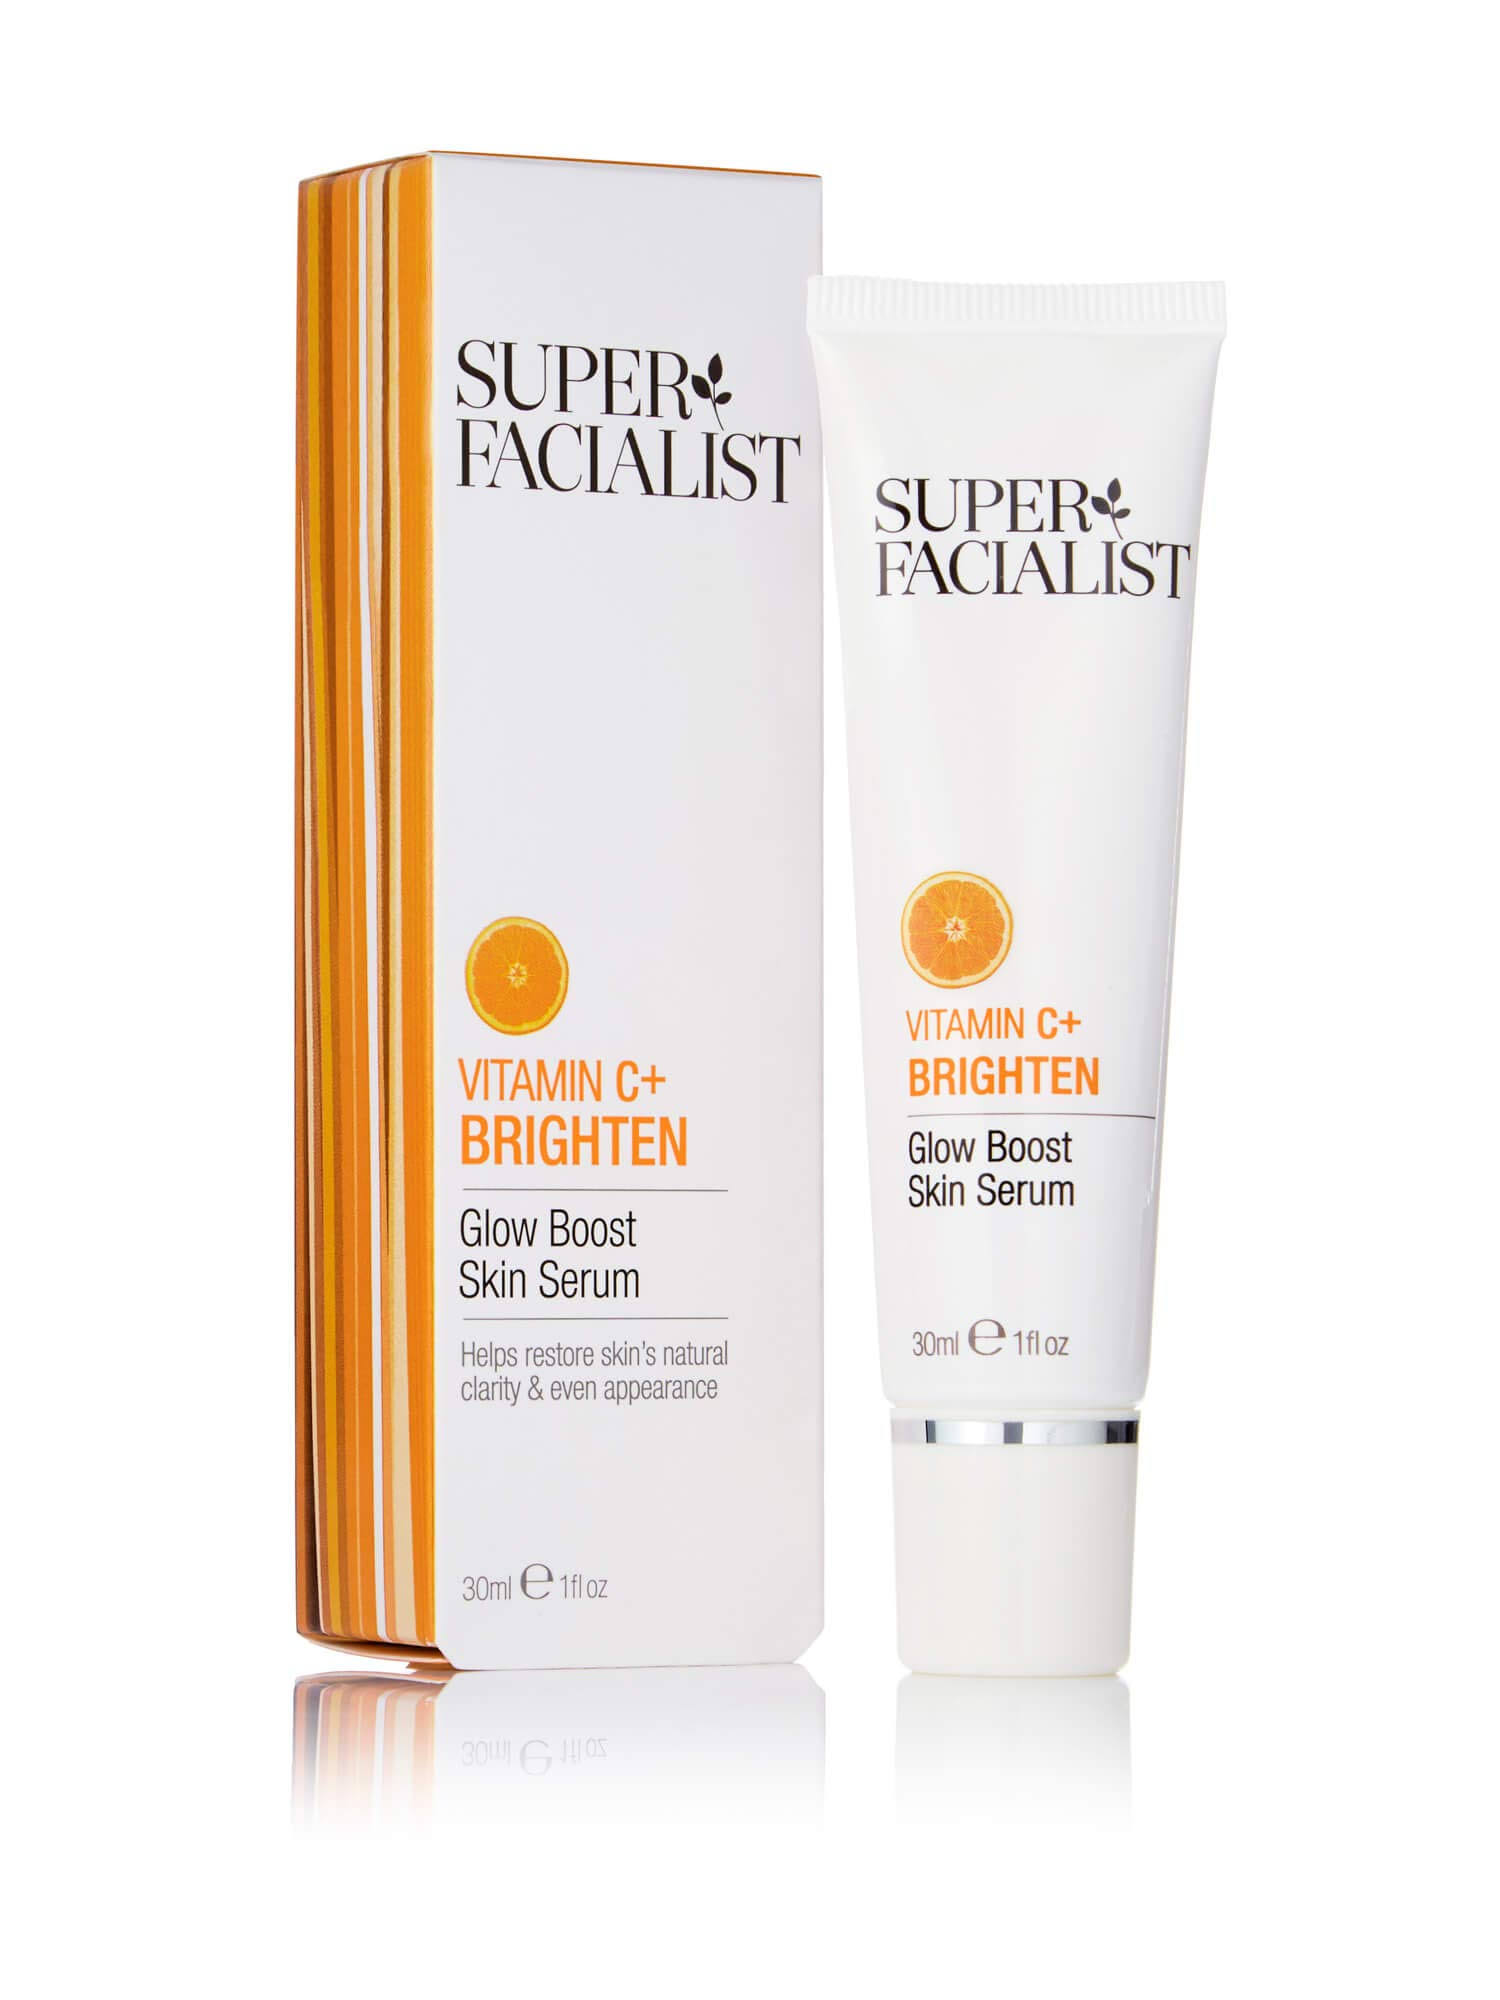 Super Facialist Vitamin C + Brighten Glow Boost Skin Serum 30ml